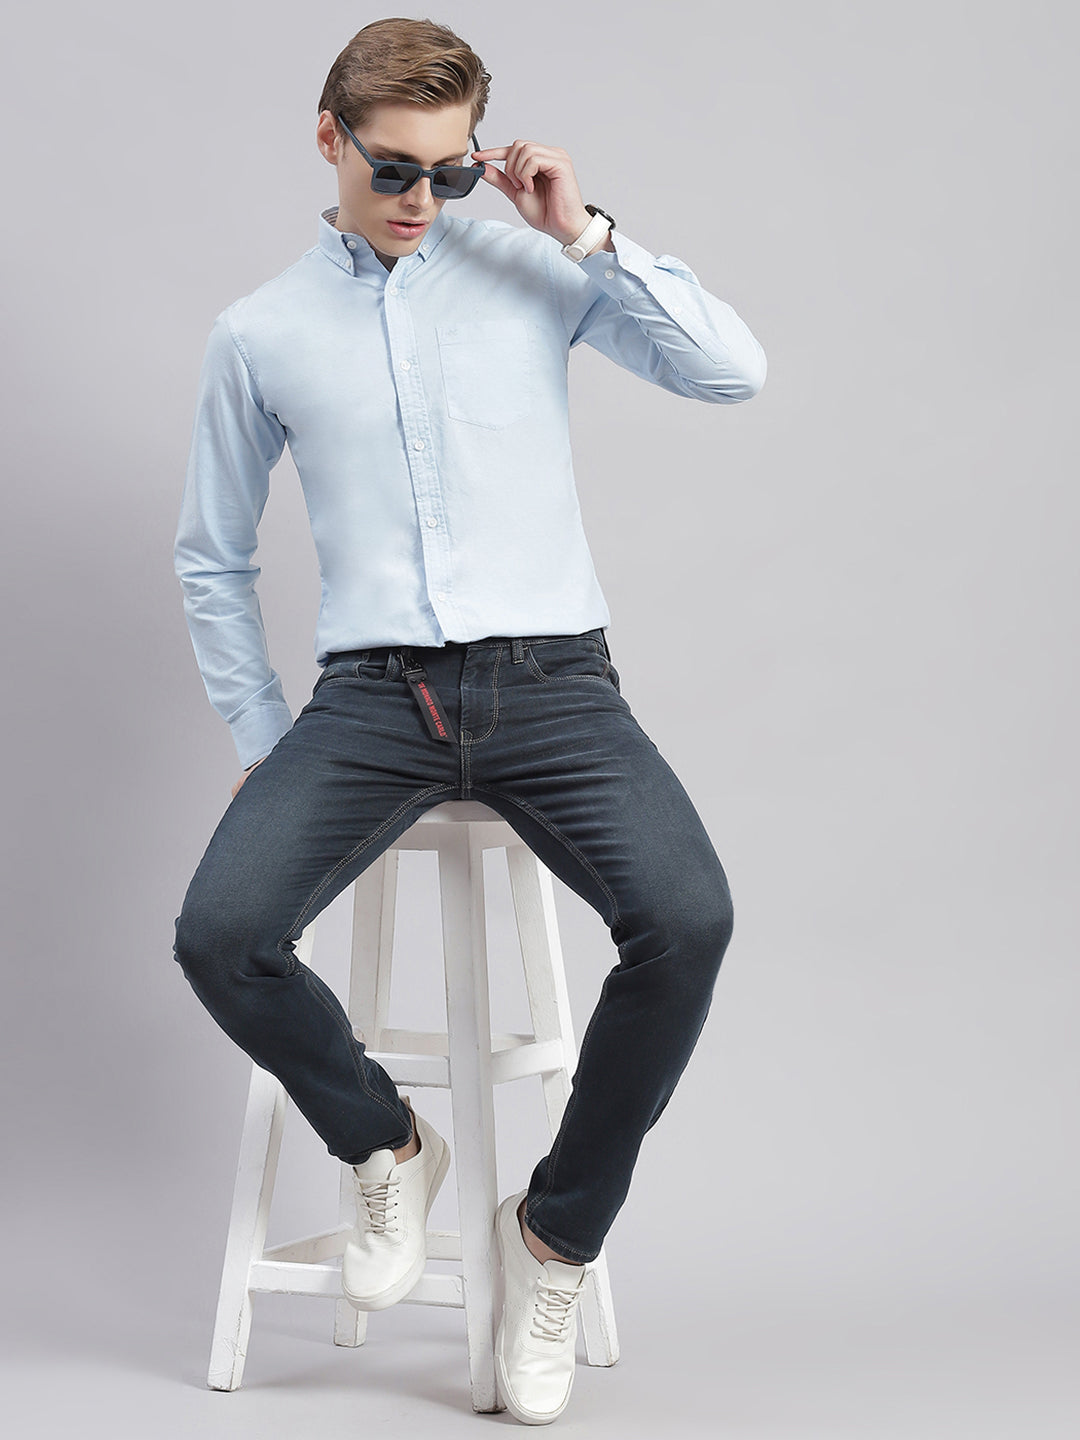 Buy Indigo Denim Pants Mid Rise Stretchable Men's Jeans Online at Bewakoof